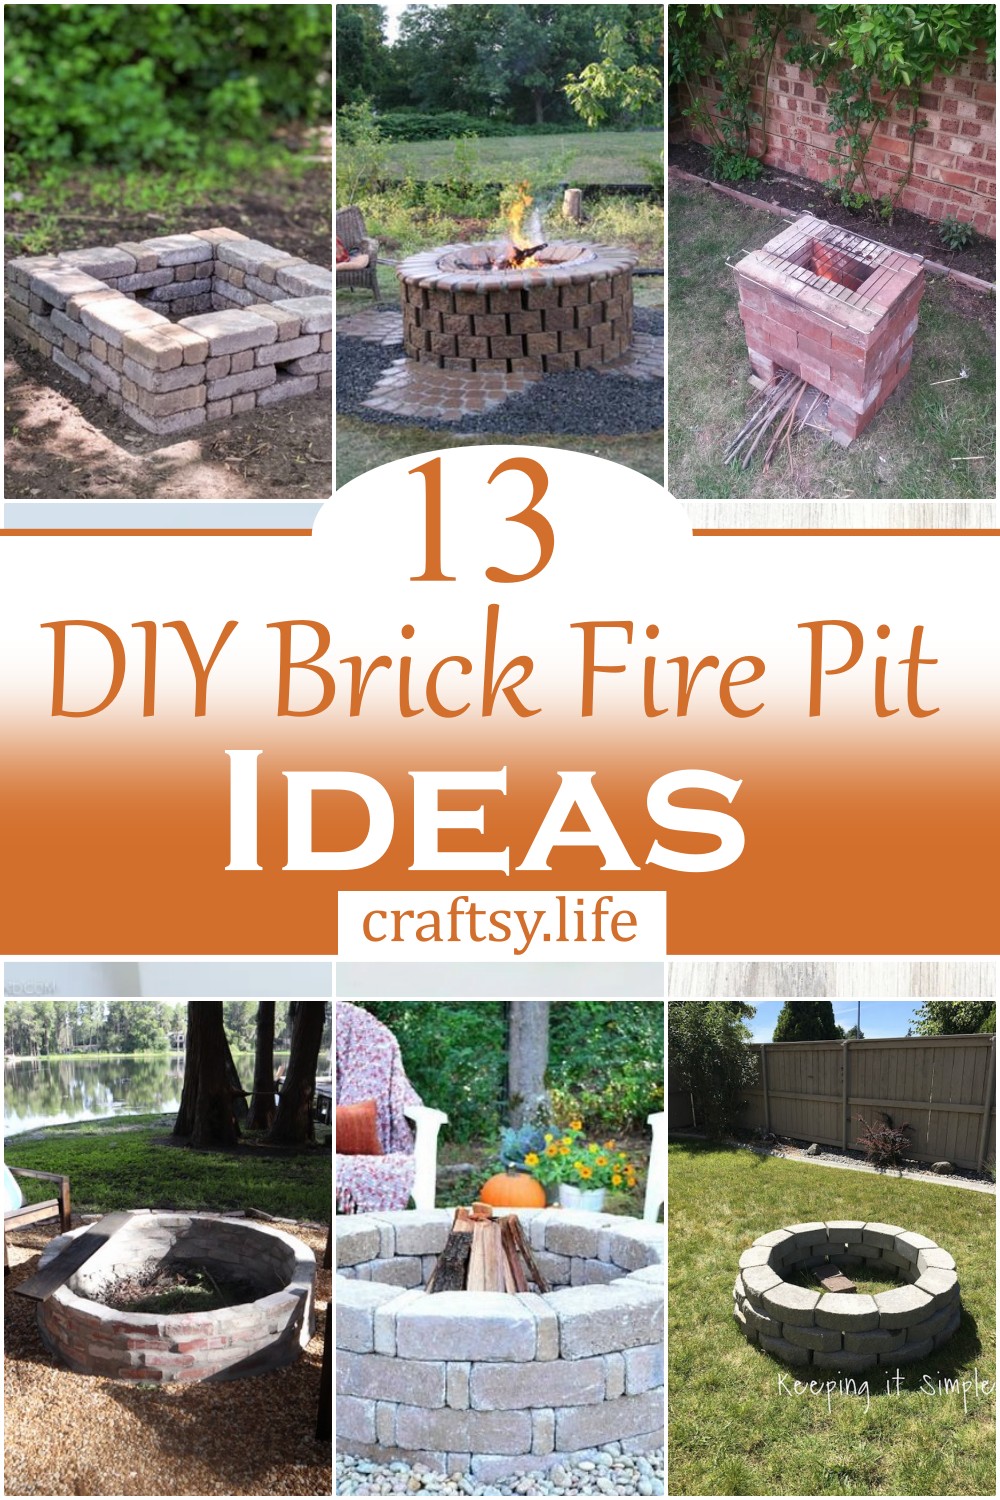 DIY Brick Fire Pit Ideas